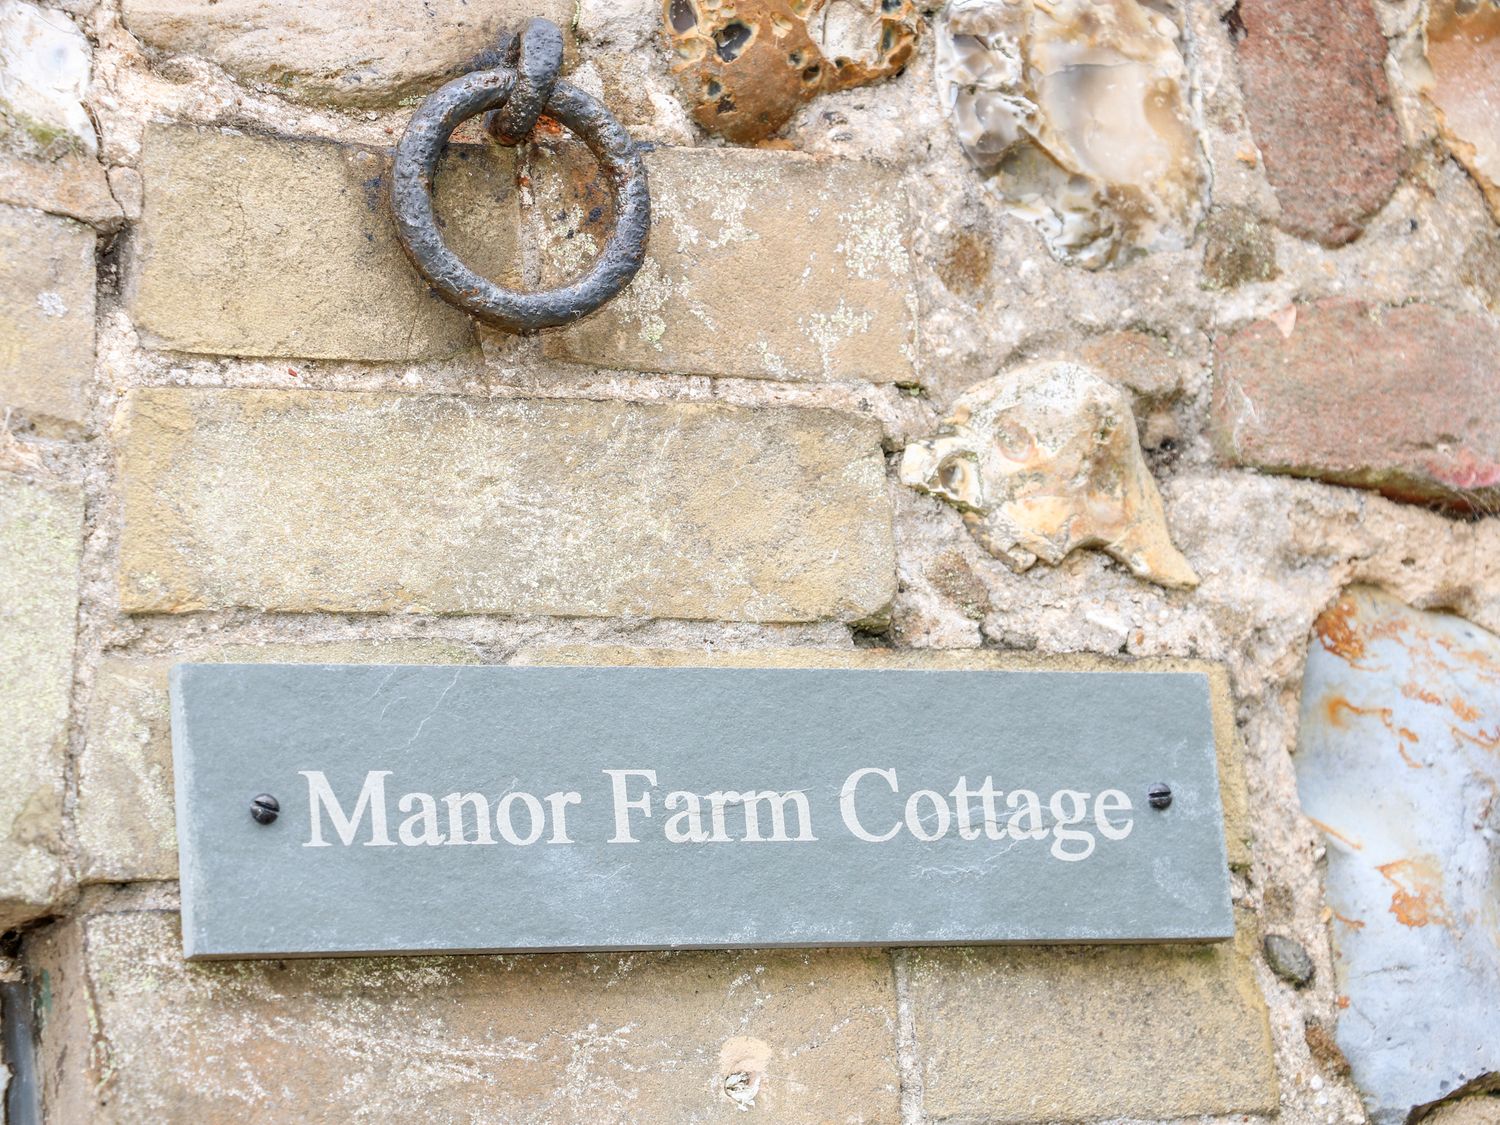 Manor Farm Cottage, East Anglia